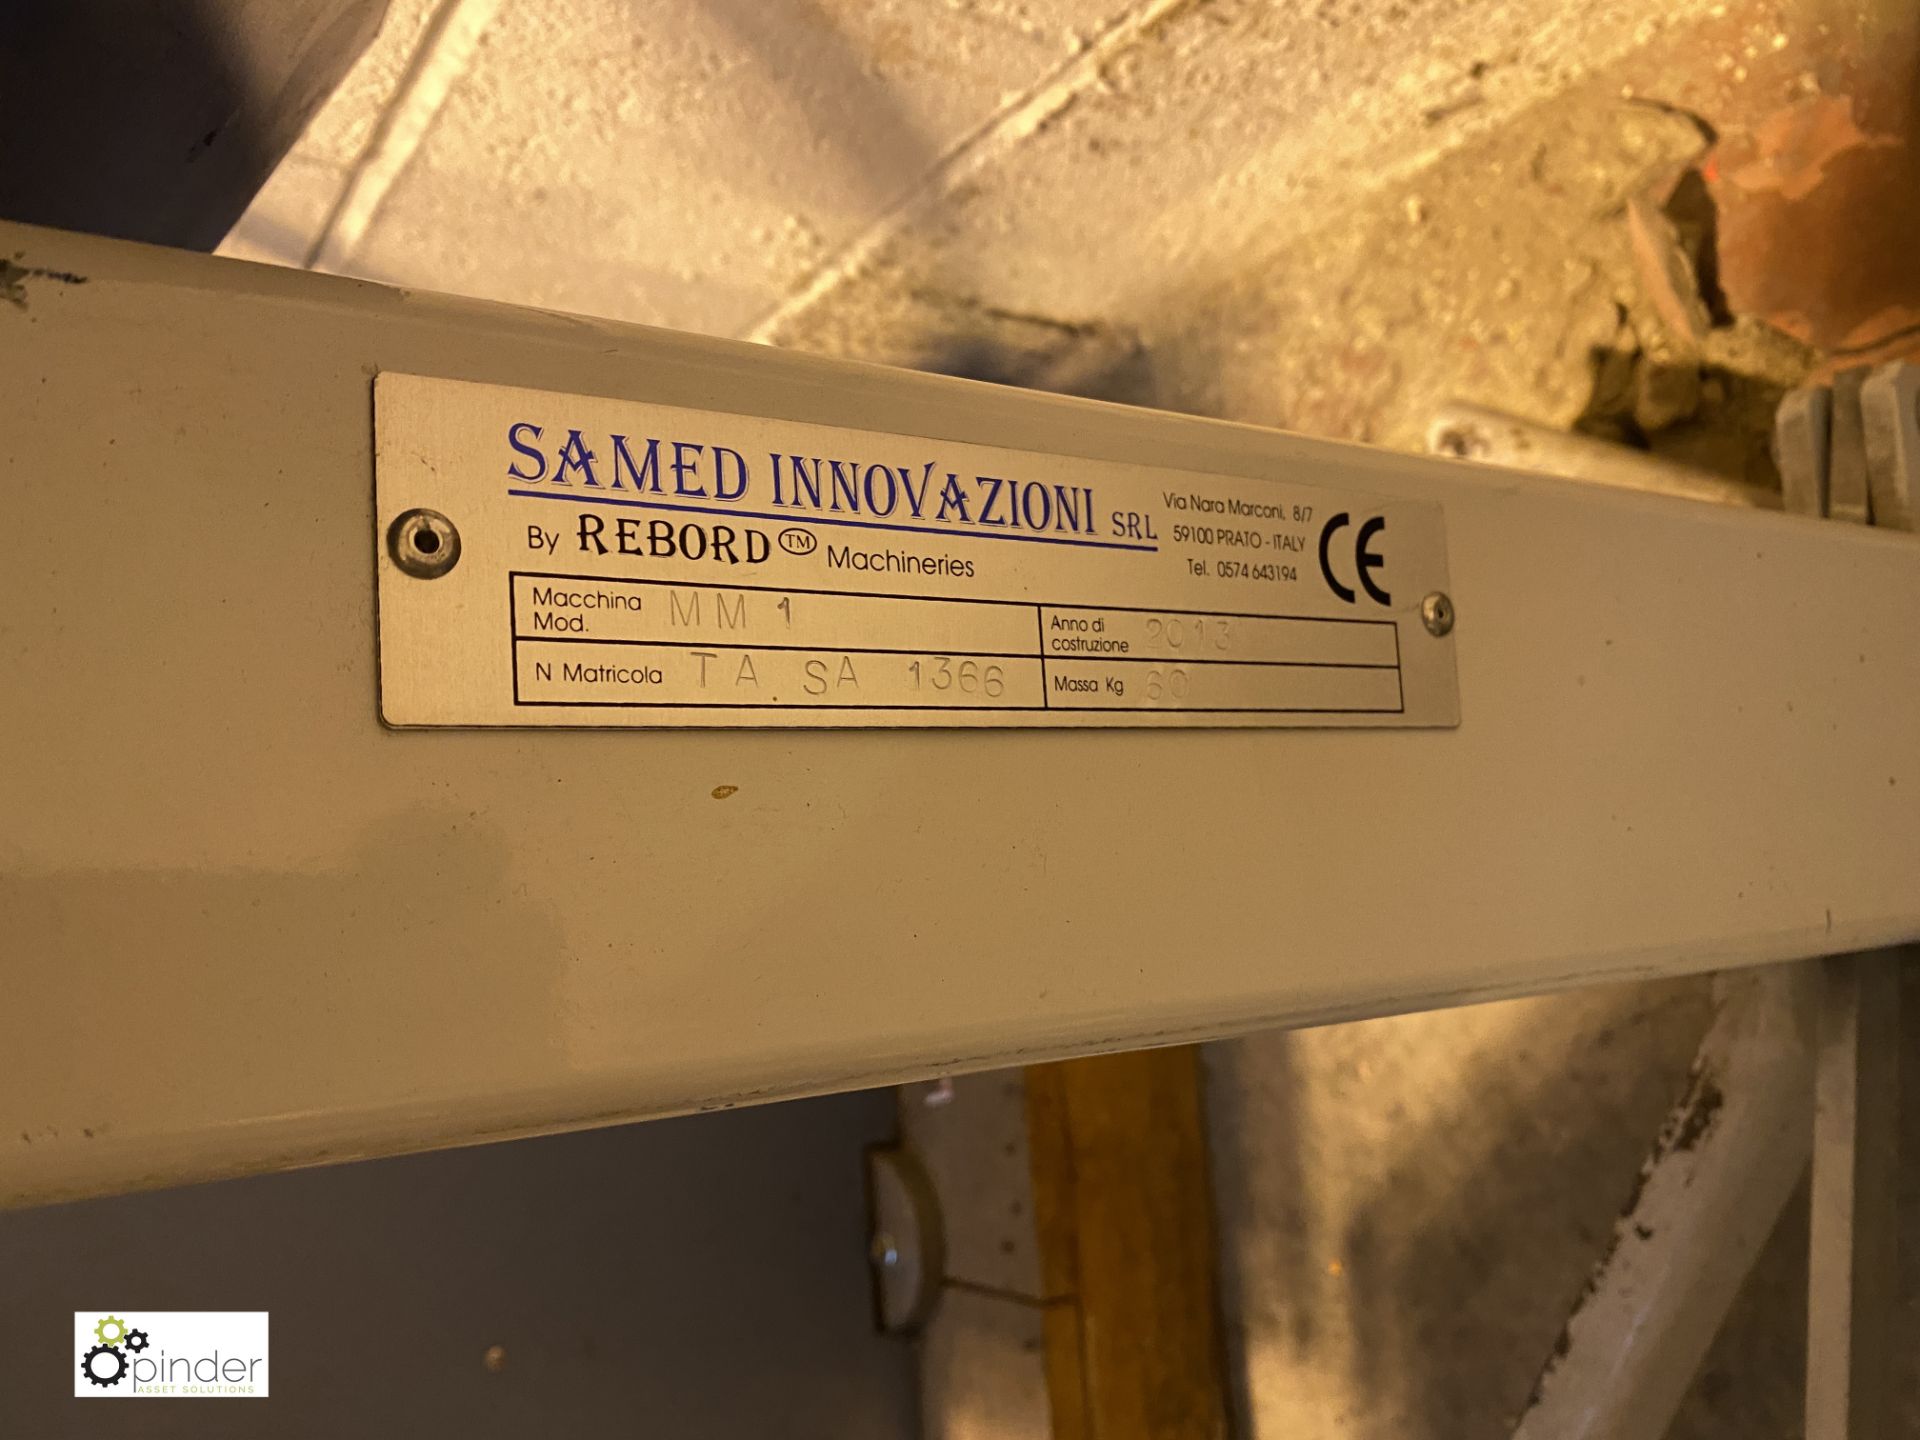 Samed Innovations MM1 Corner Cutter, serial number TASA 1366, year 2013 (LOCATION: Chantry Bridge, - Image 4 of 6